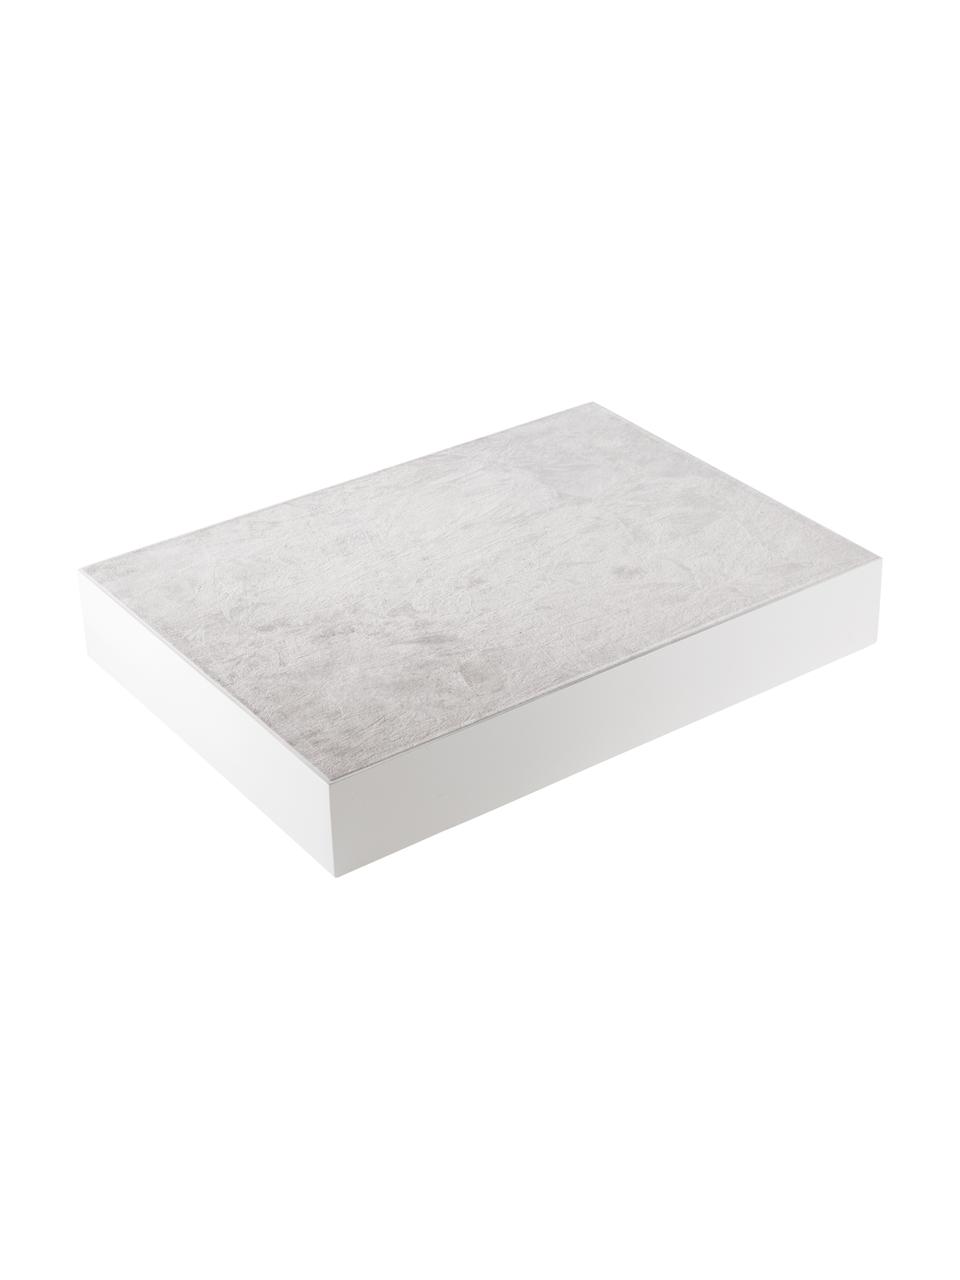 Hoogglans dienblad Hayley in wit, Dienblad: MDF, vijflagig gelakt, Onderzijde: fluweel, Wit, B 30 x D 30 cm